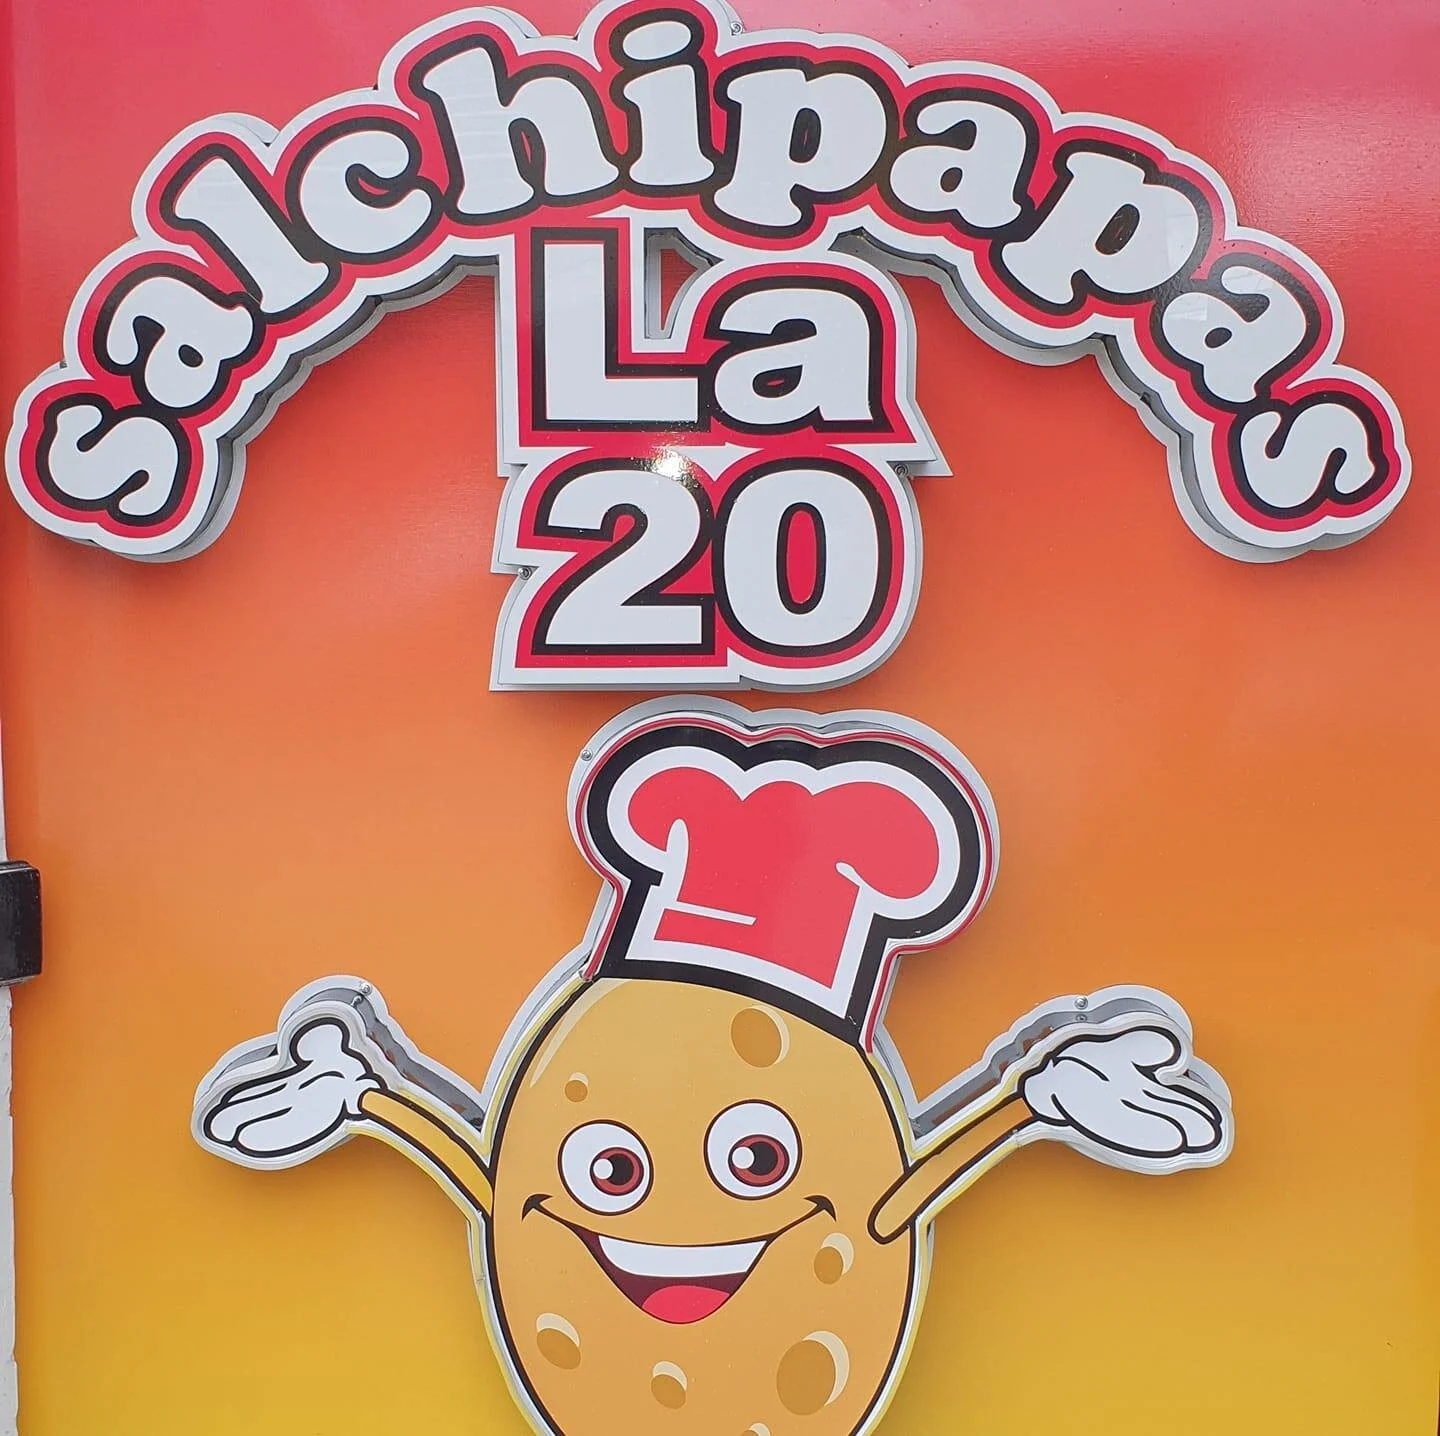 Salchipapas La 20 Popayán!-7672